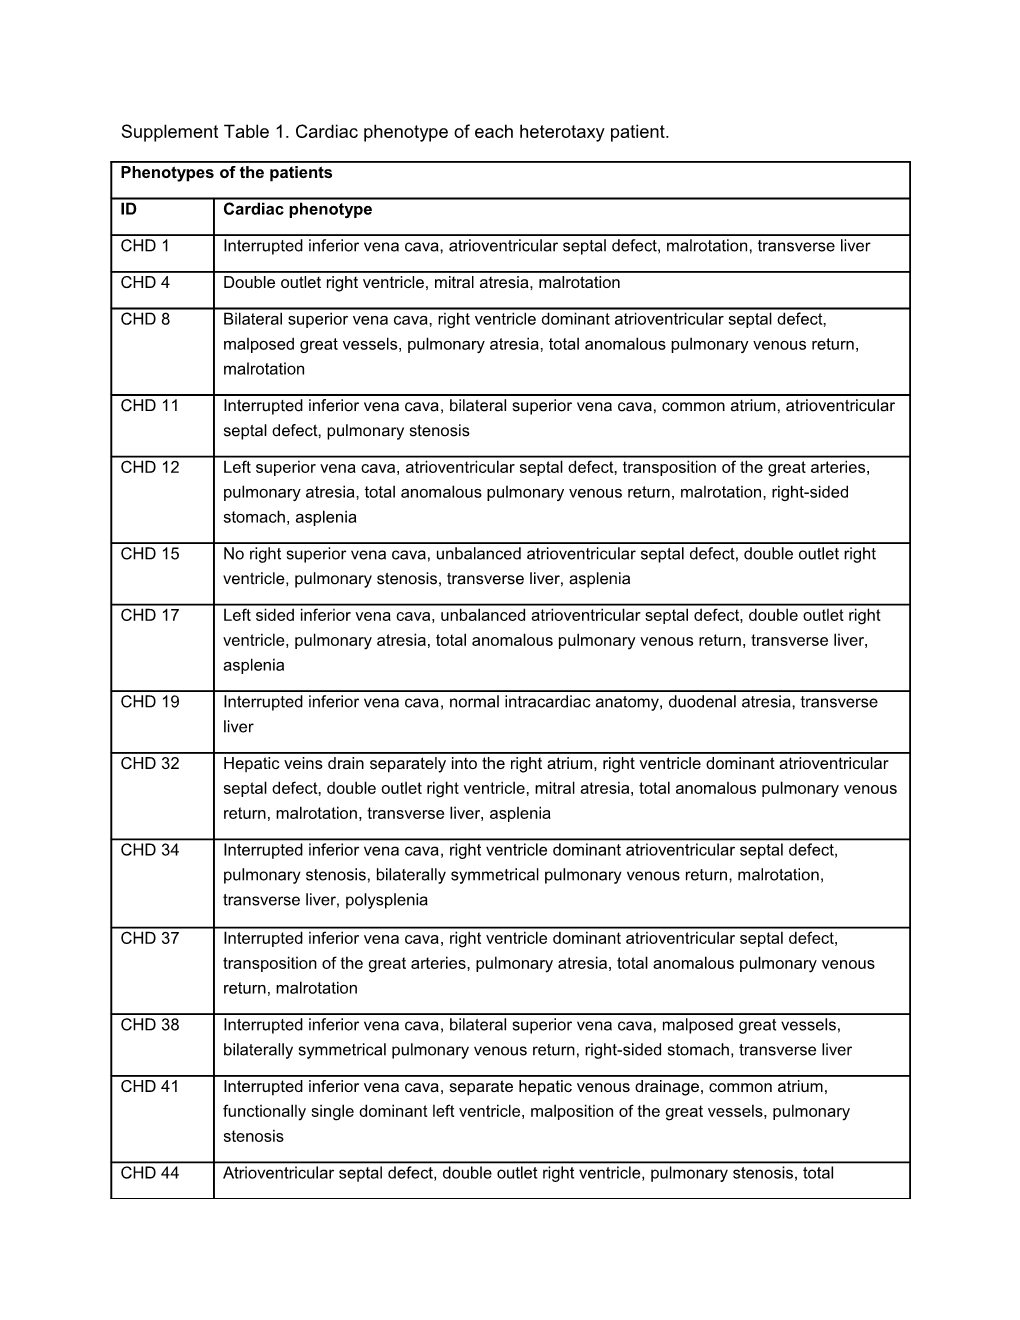 Supplement Table 1. Cardiac Phenotype of Each Heterotaxy Patient